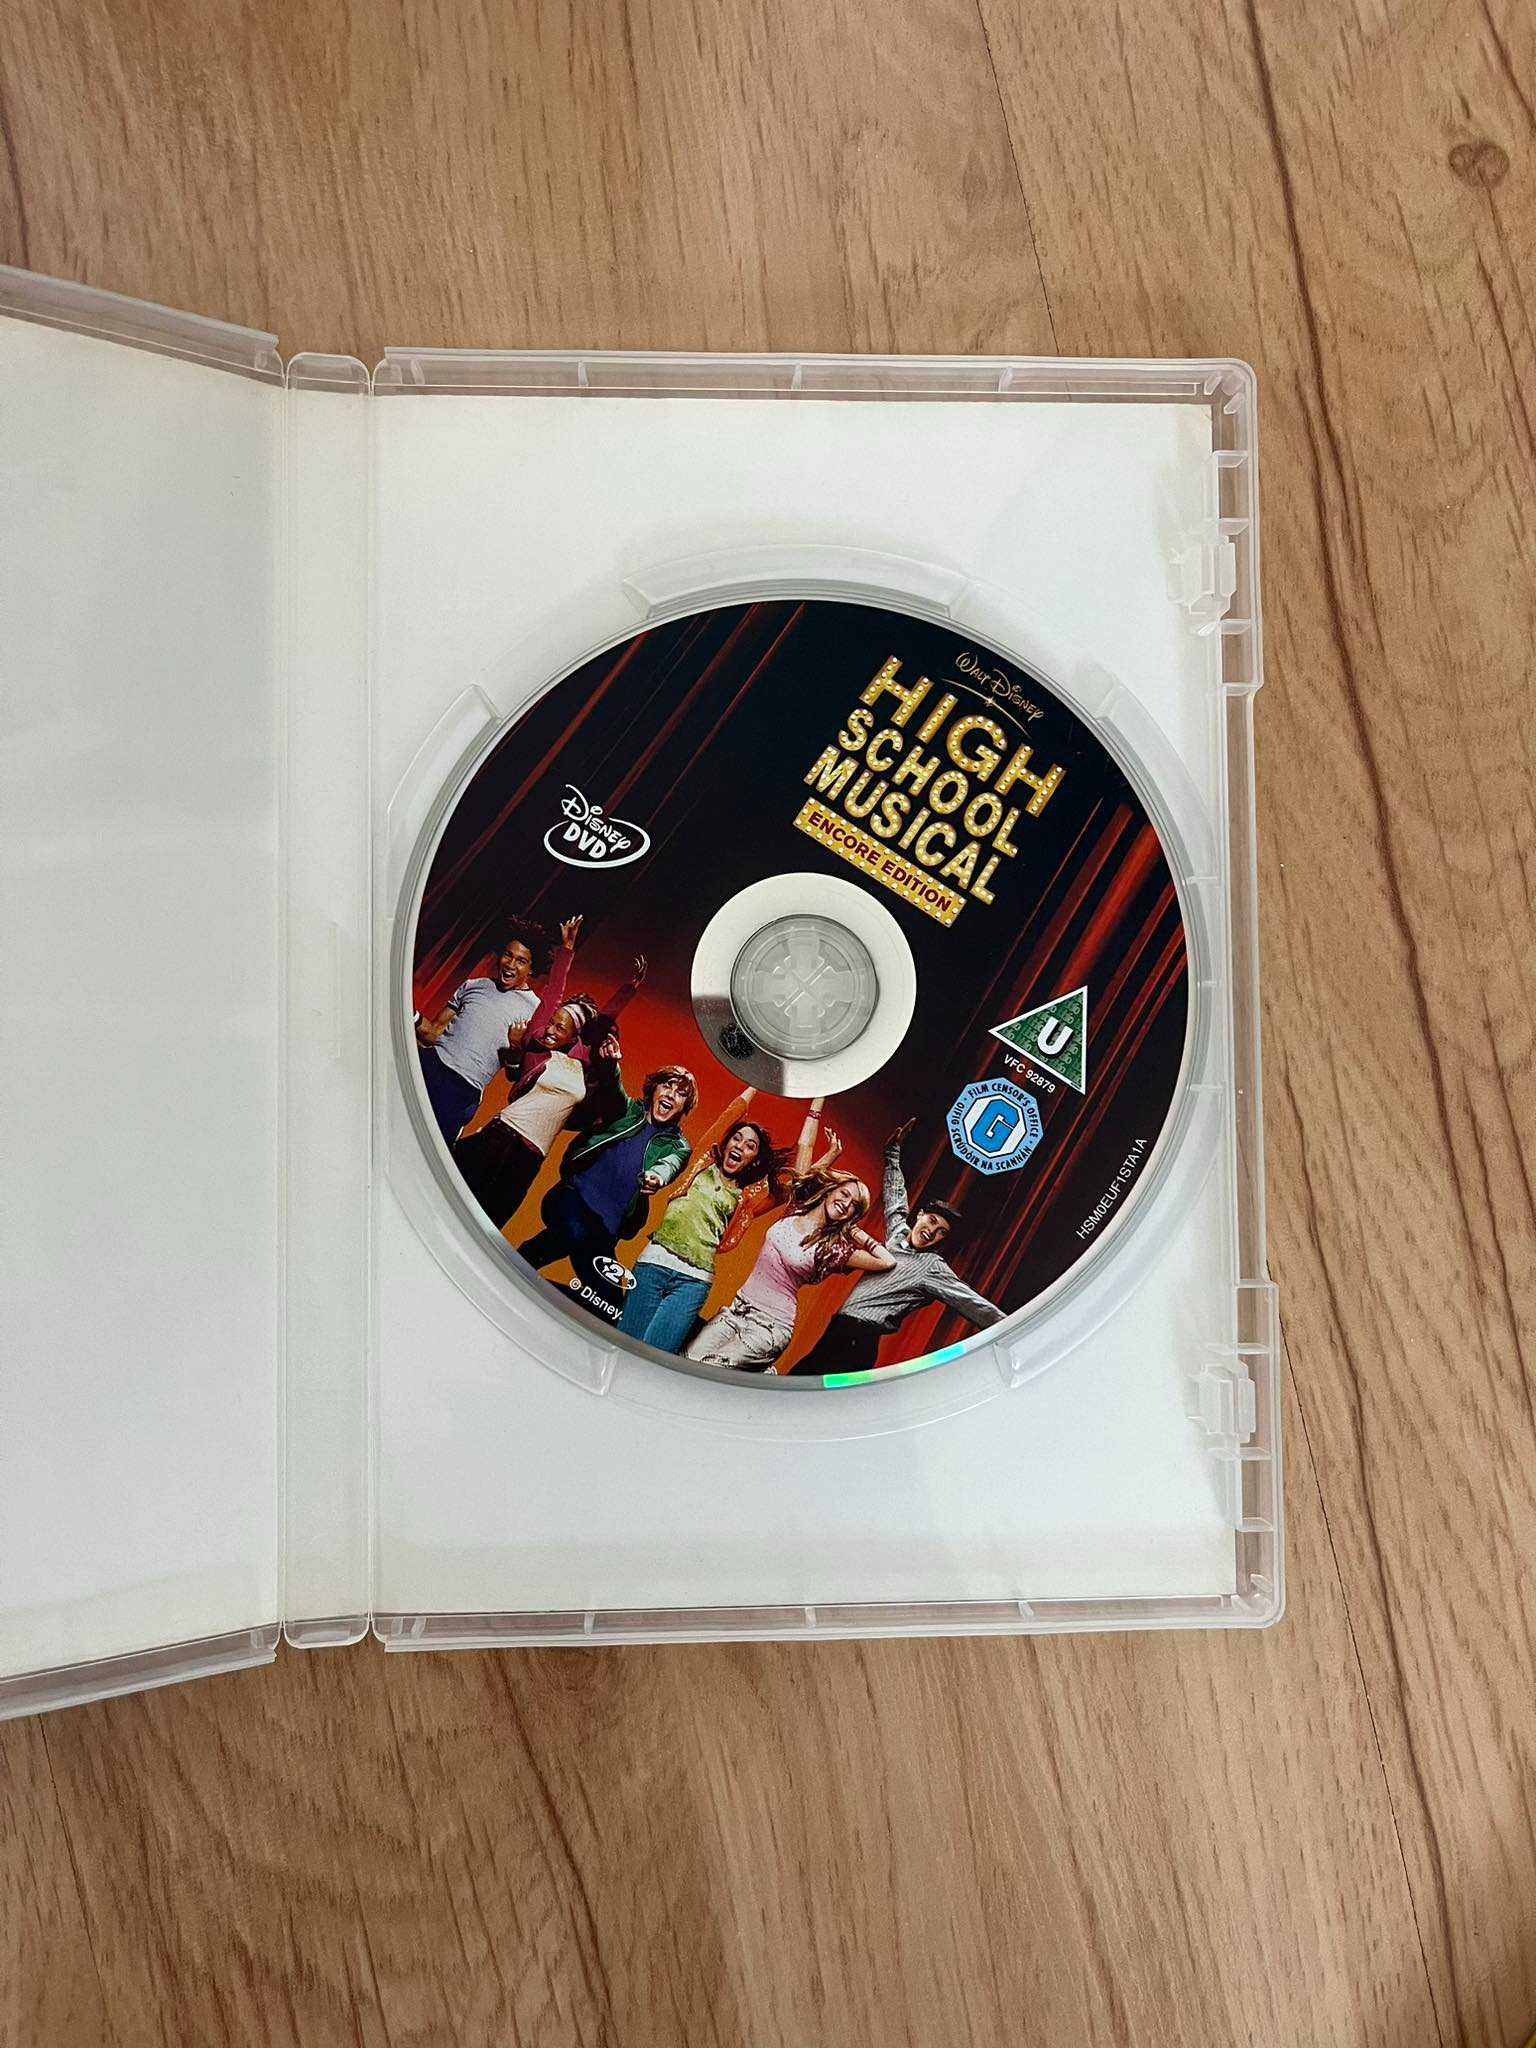 high school musical 1 płyta cd film movie dvd